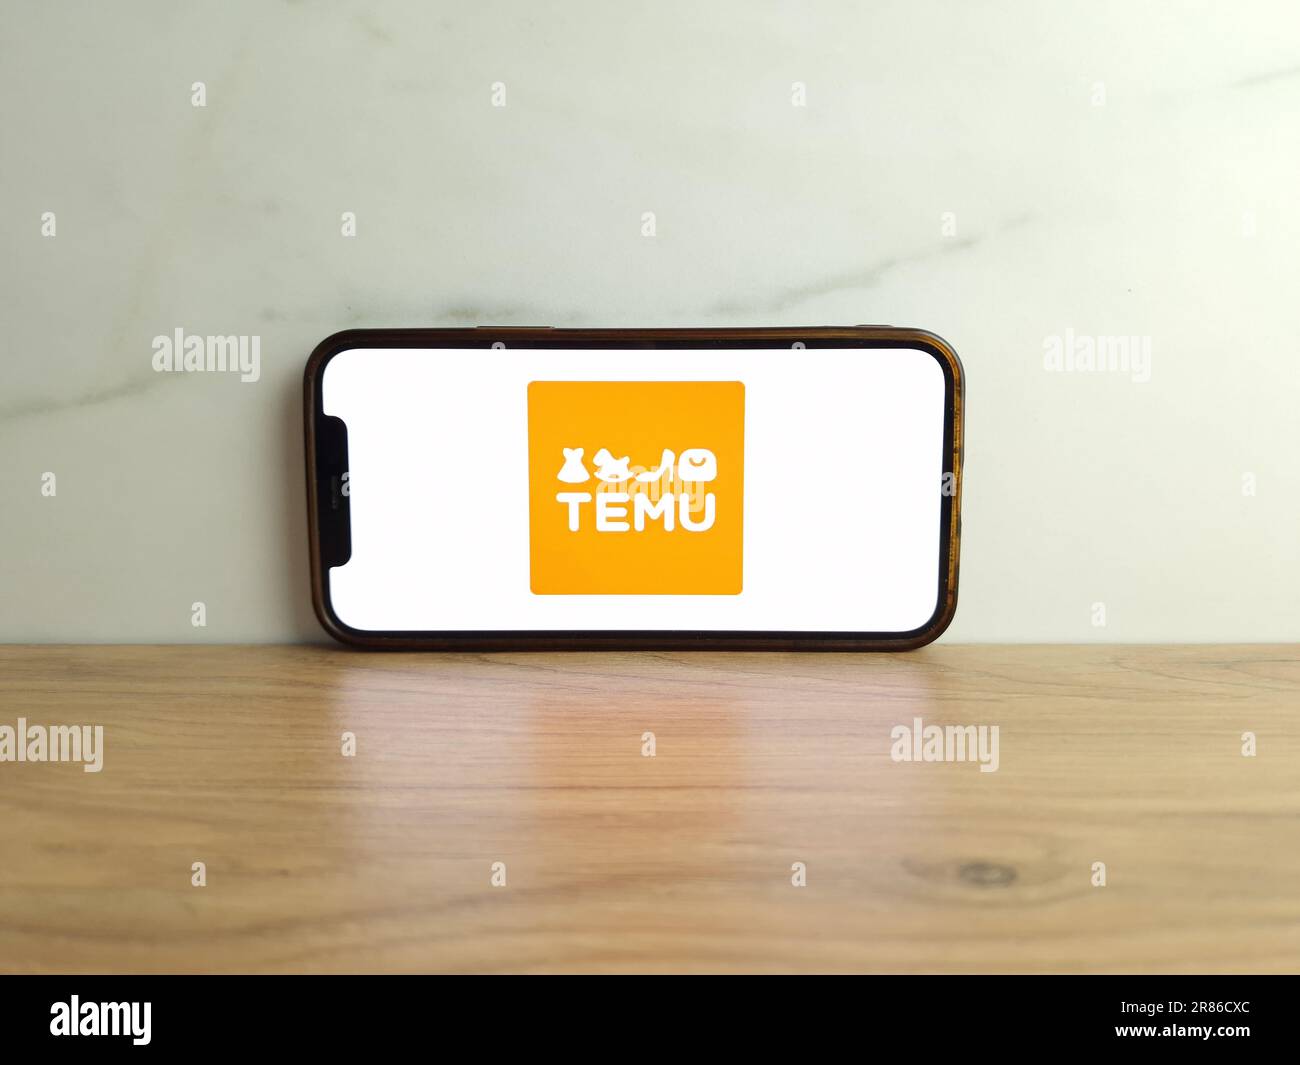 Konskie, Poland - June 17, 2023: Temu online marketplace logo displayed on mobile phone screen Stock Photo